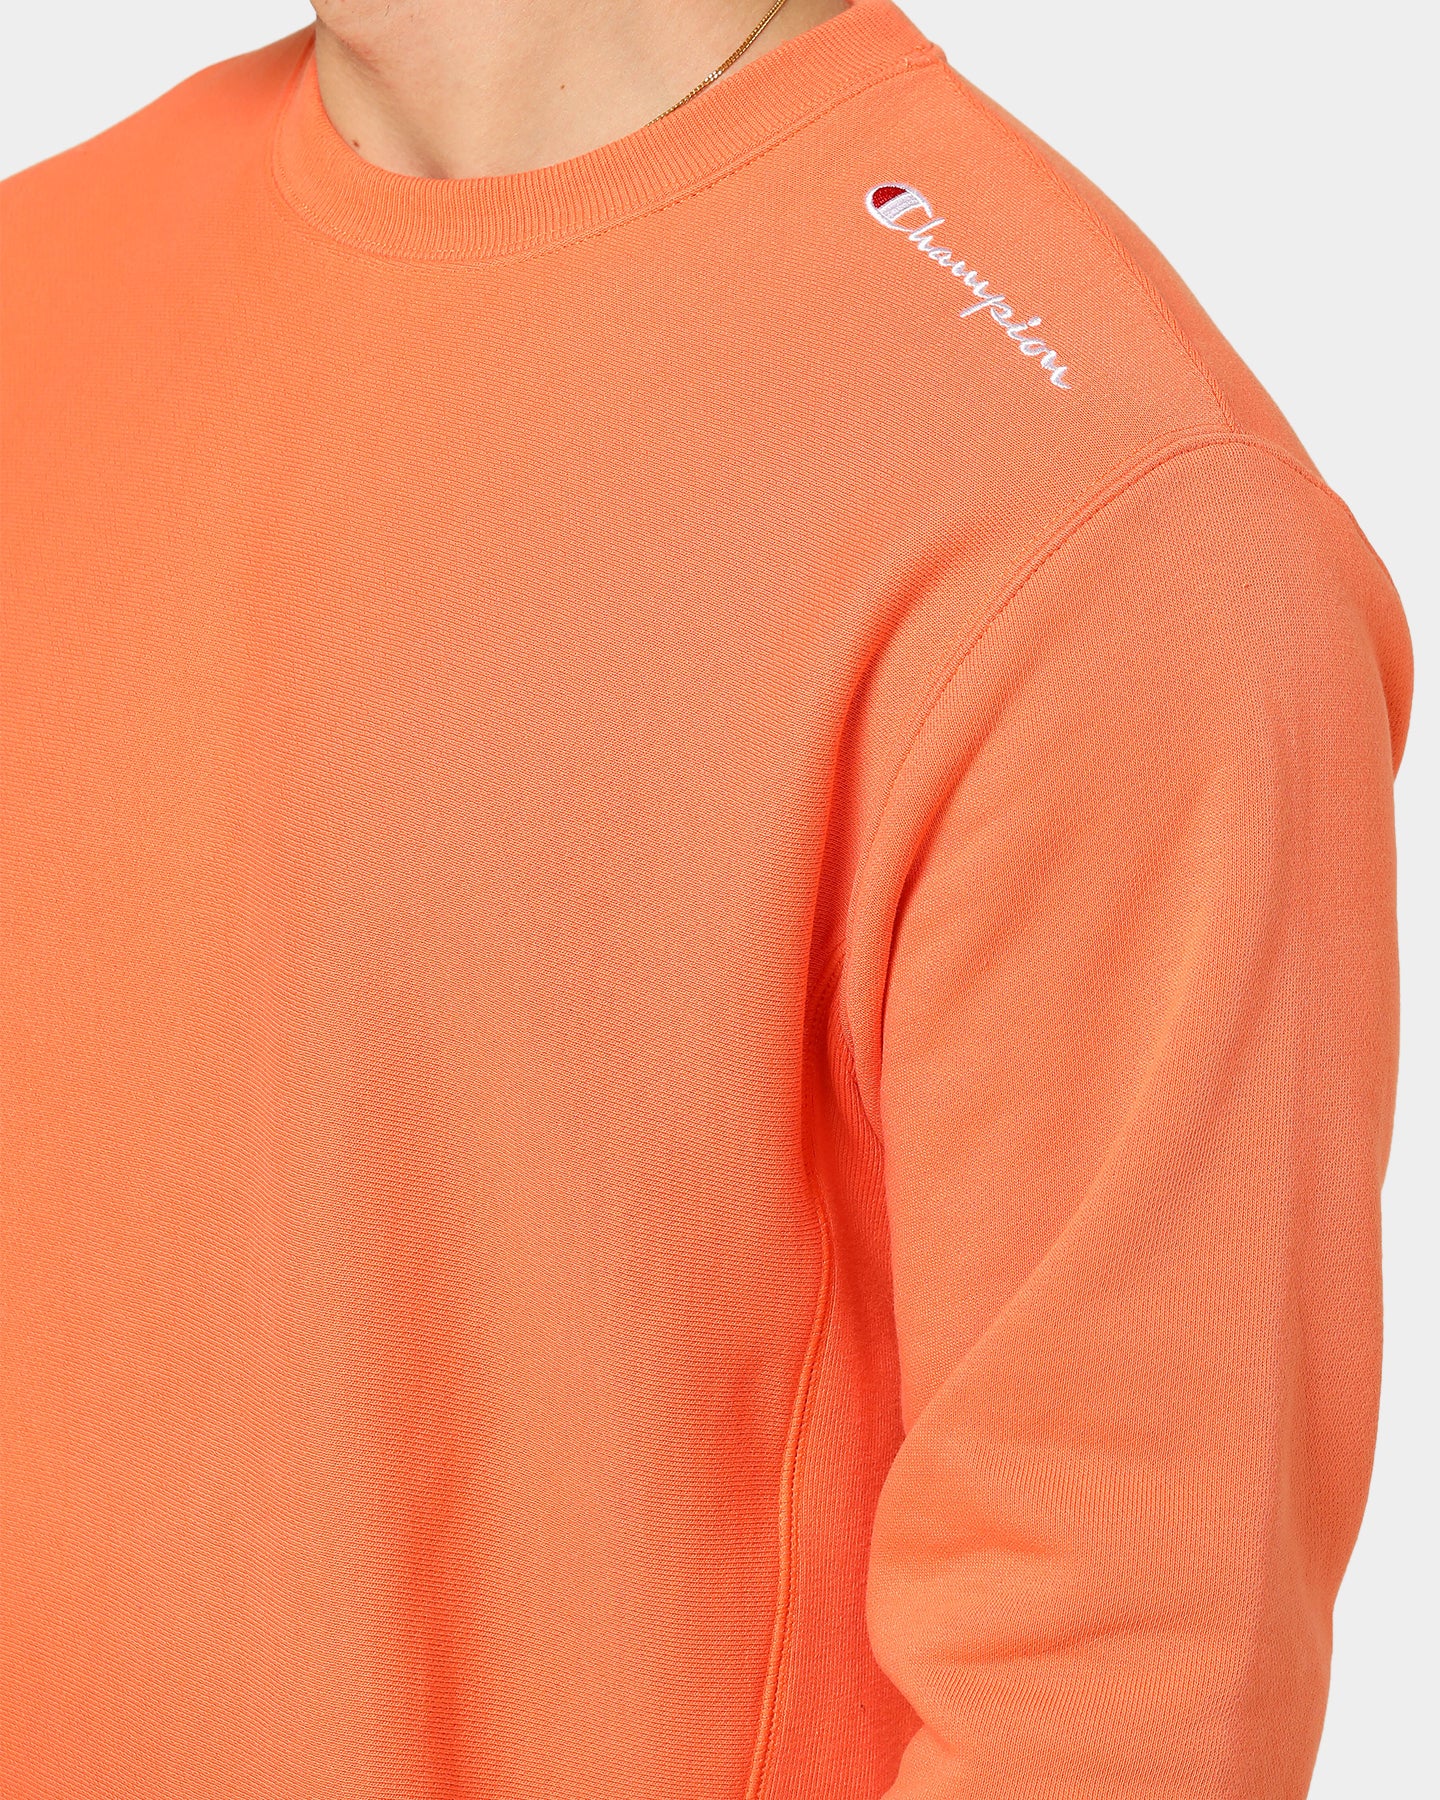 orange champion sweater